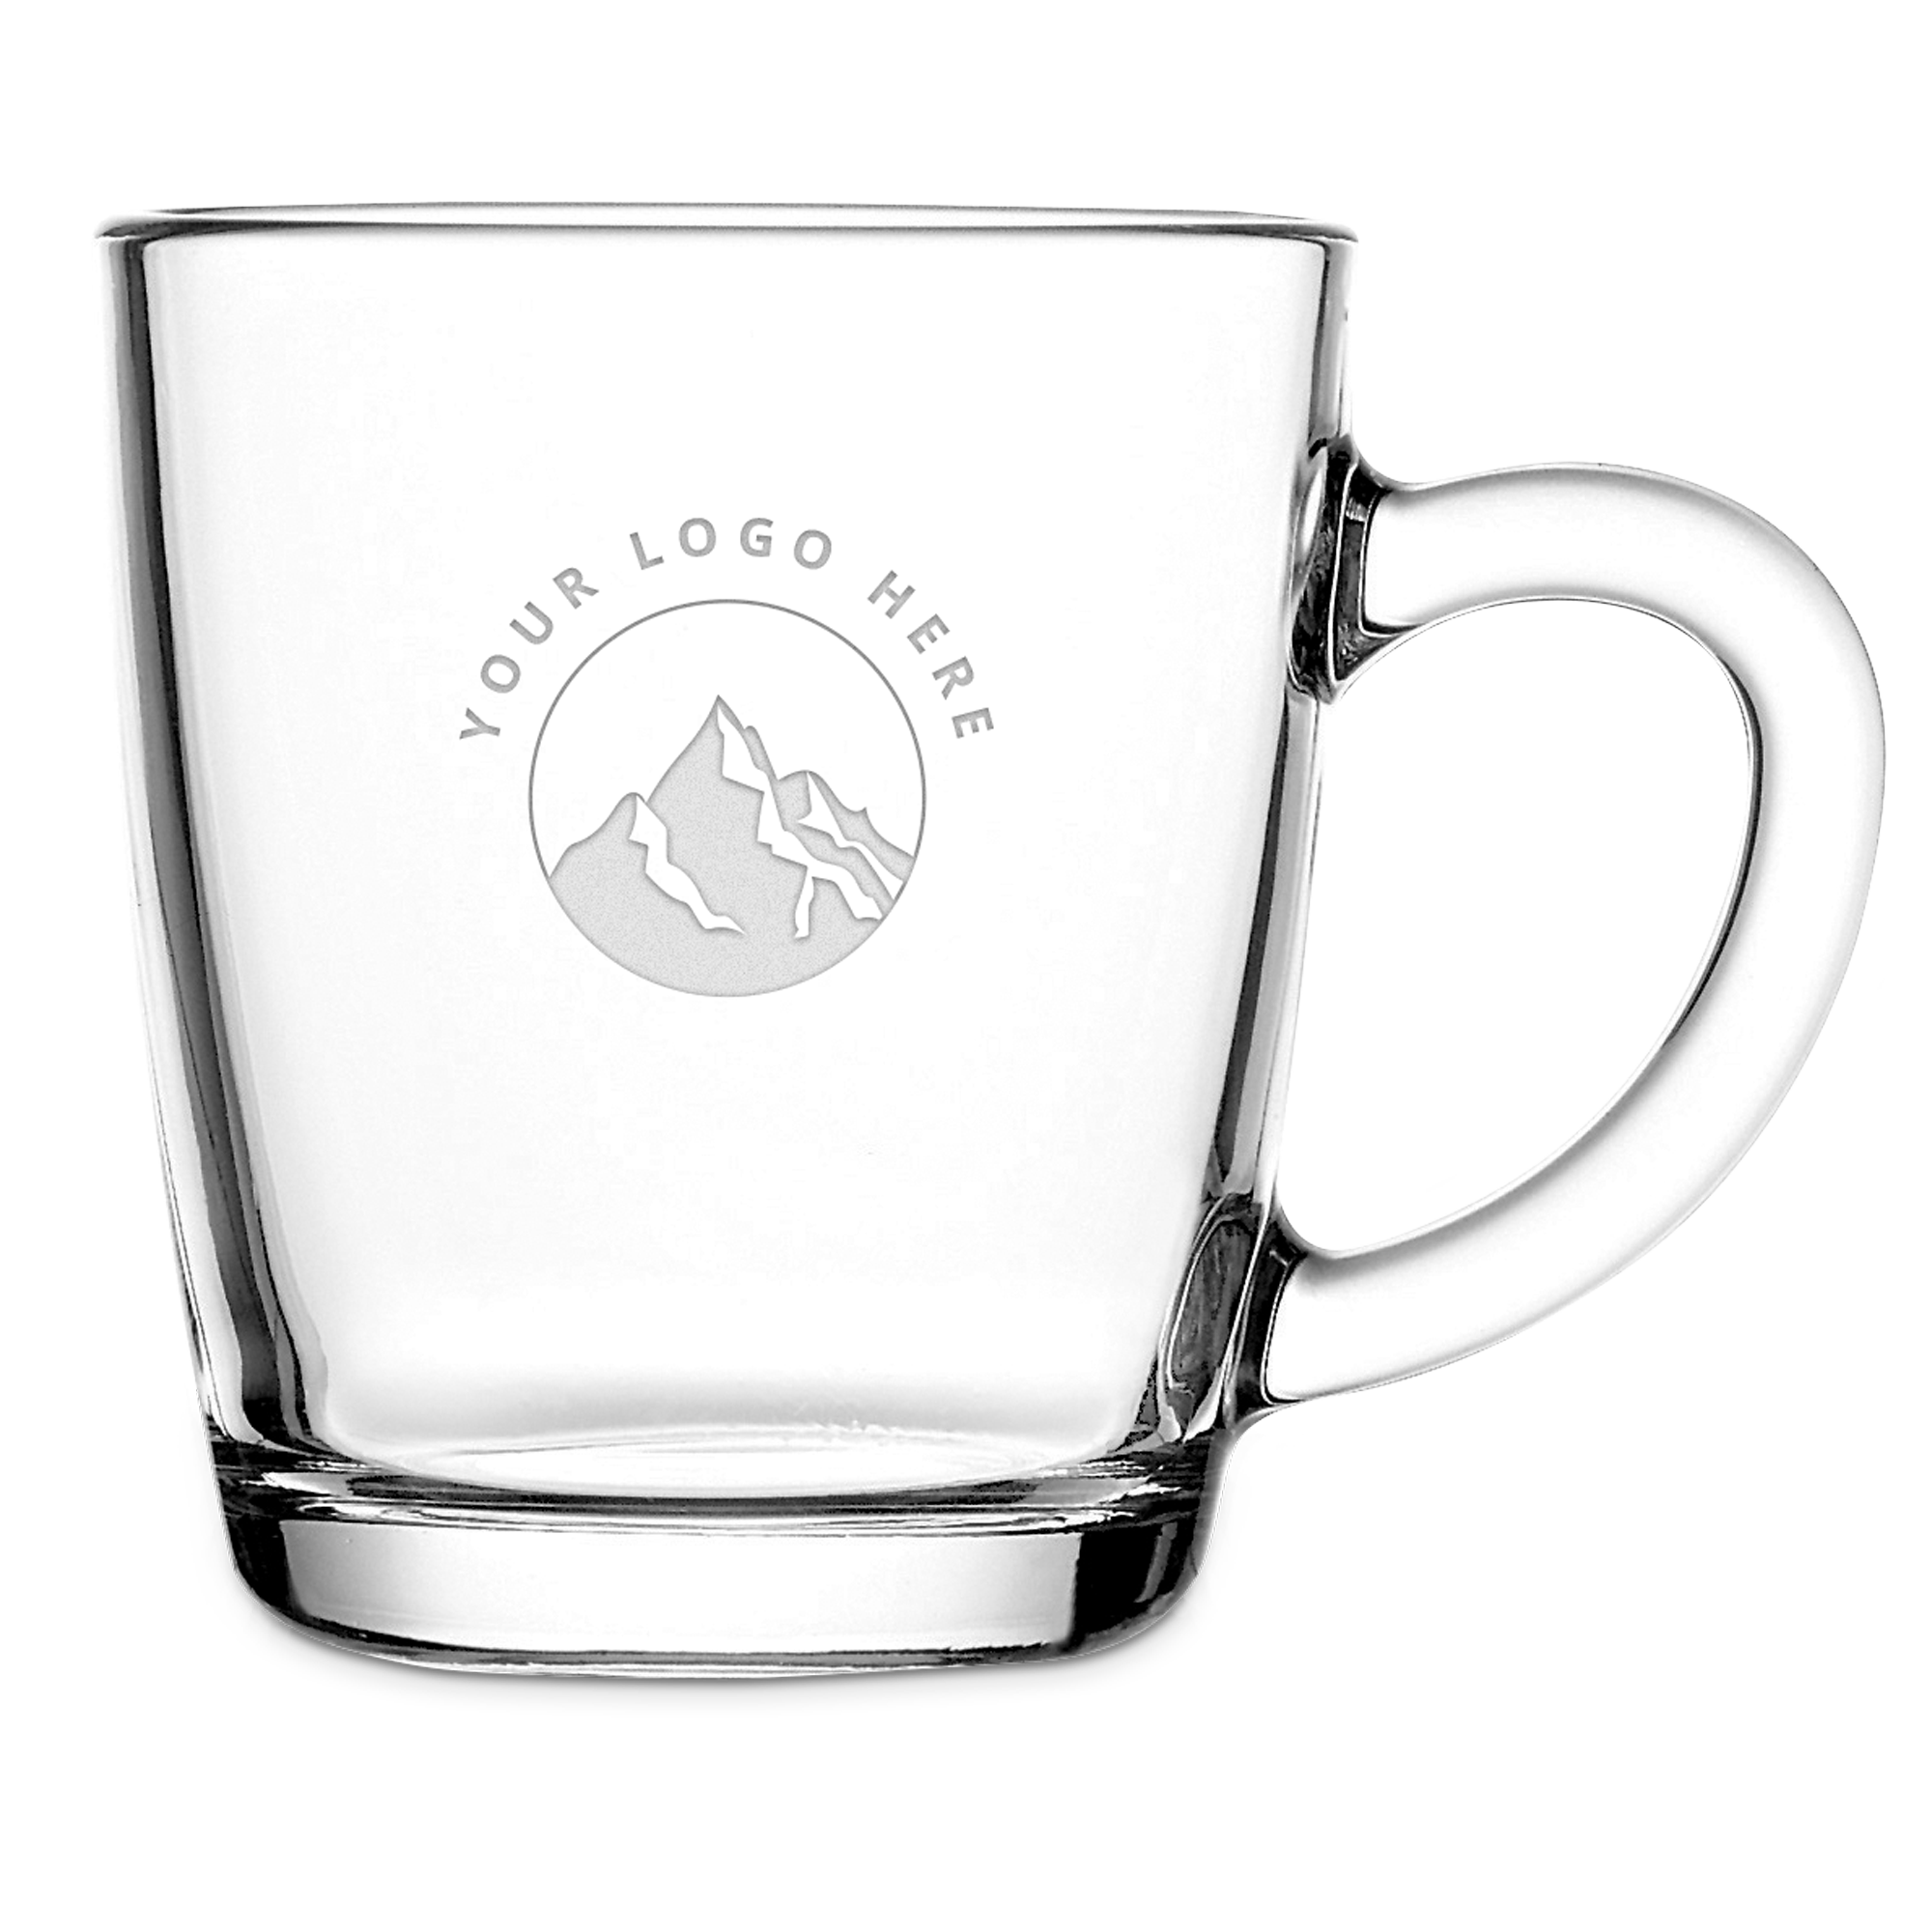 Personalised glass mug - Engraved